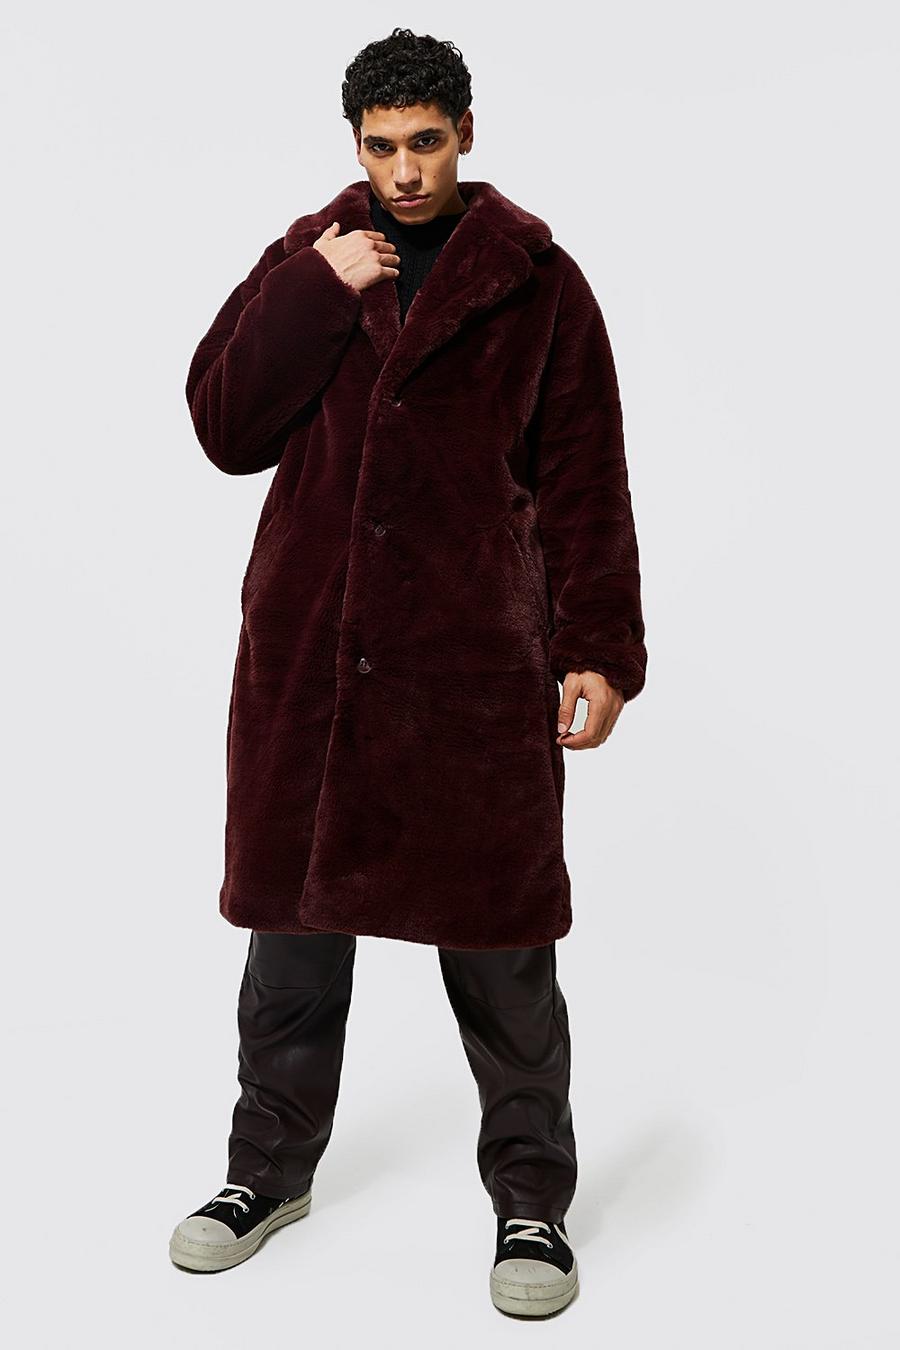 Burgundy red Plain Faux Fur Coat